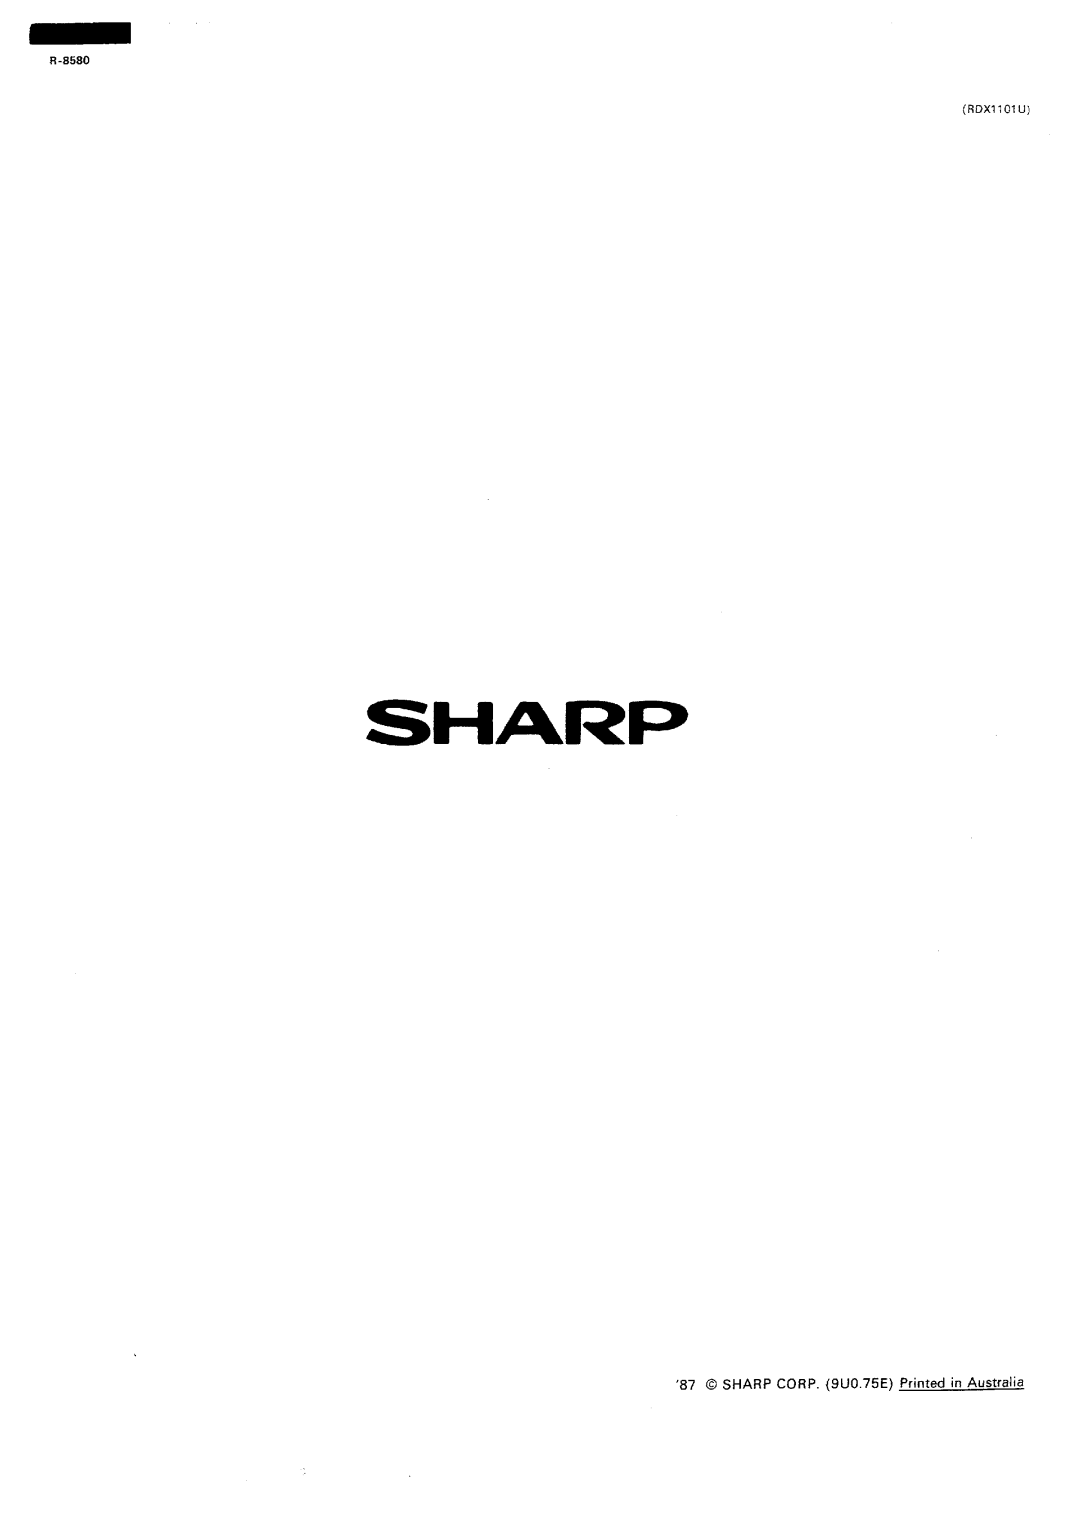 Sharp r-8580 manual Sharp, ‘87 0 SHARP CORP. 9U0.75E Printed in Australia 